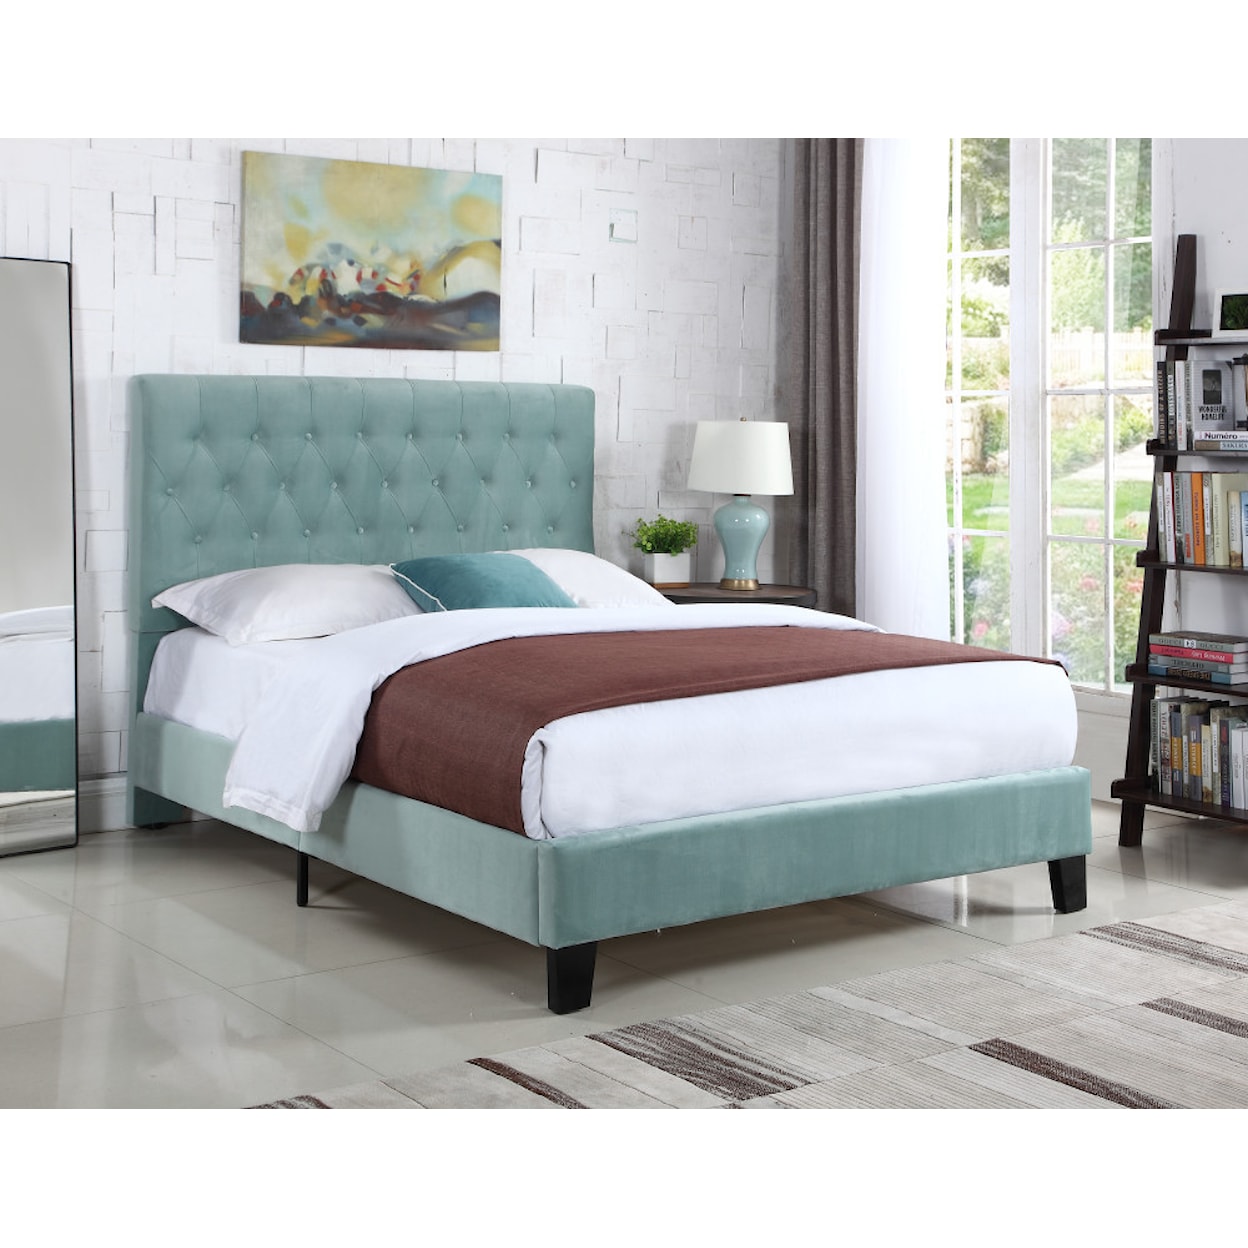 Emerald Amelia California King Upholstered Bed